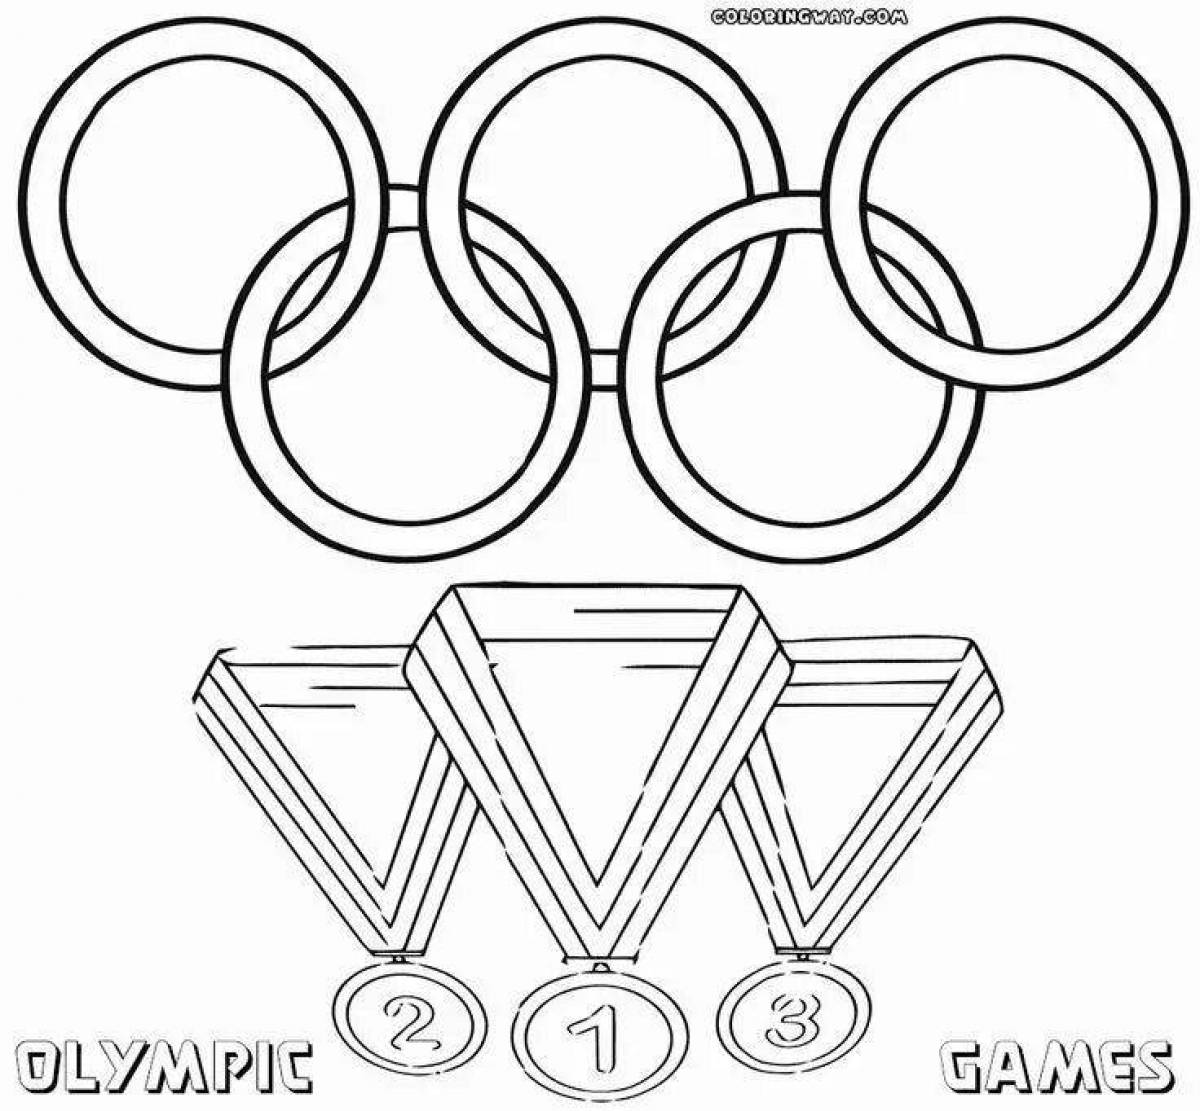 Joyful olympic flag coloring page